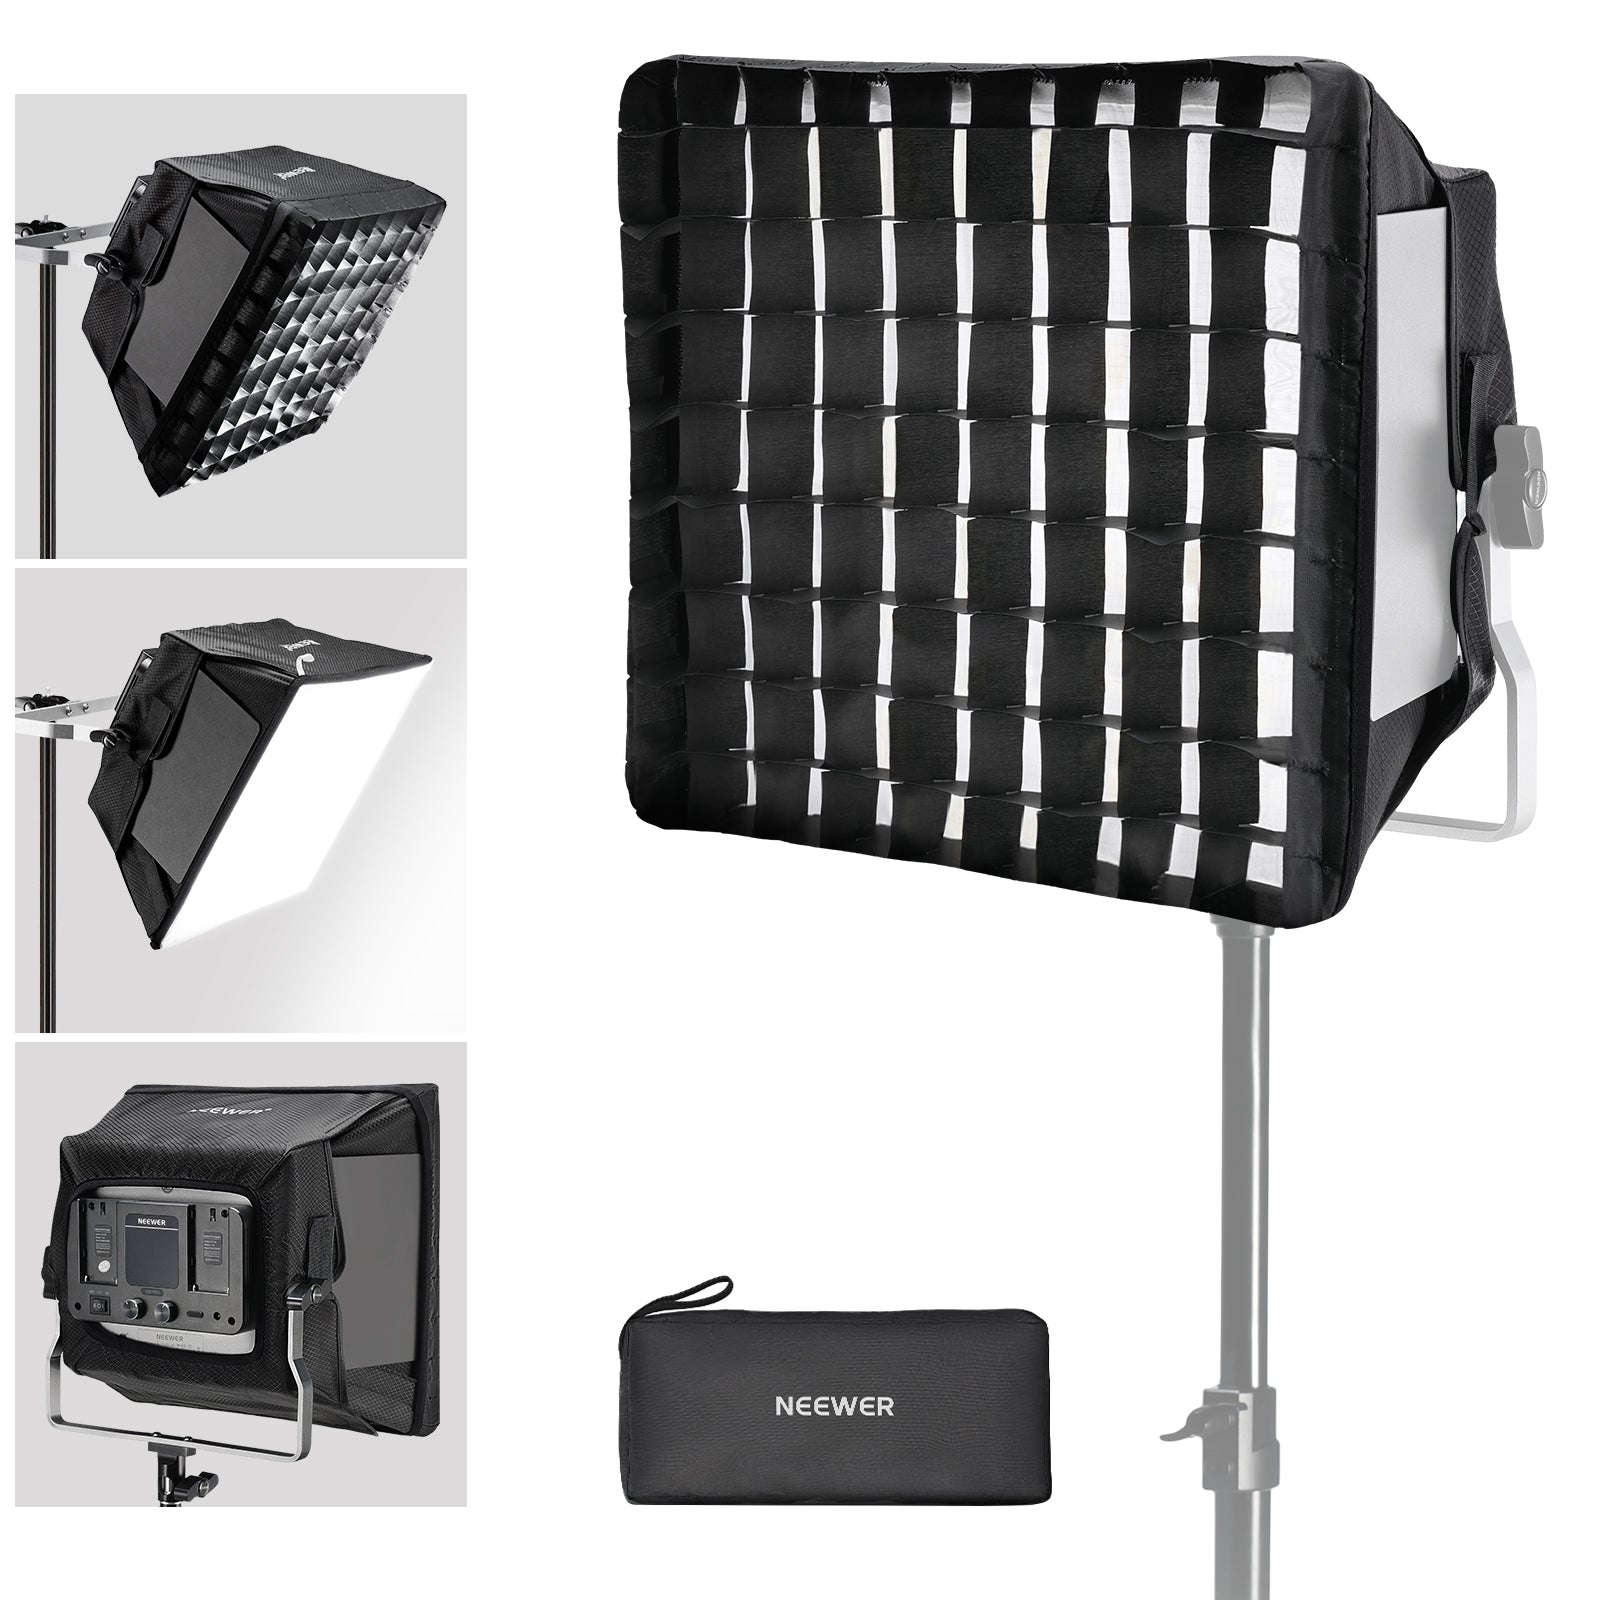 Neewer 530/ 660 Pro Rgb Led Video Light With App Control Softbox  Kit,360°full Color,50w Video Lighting Cri 97 - Photographic Lighting -  AliExpress